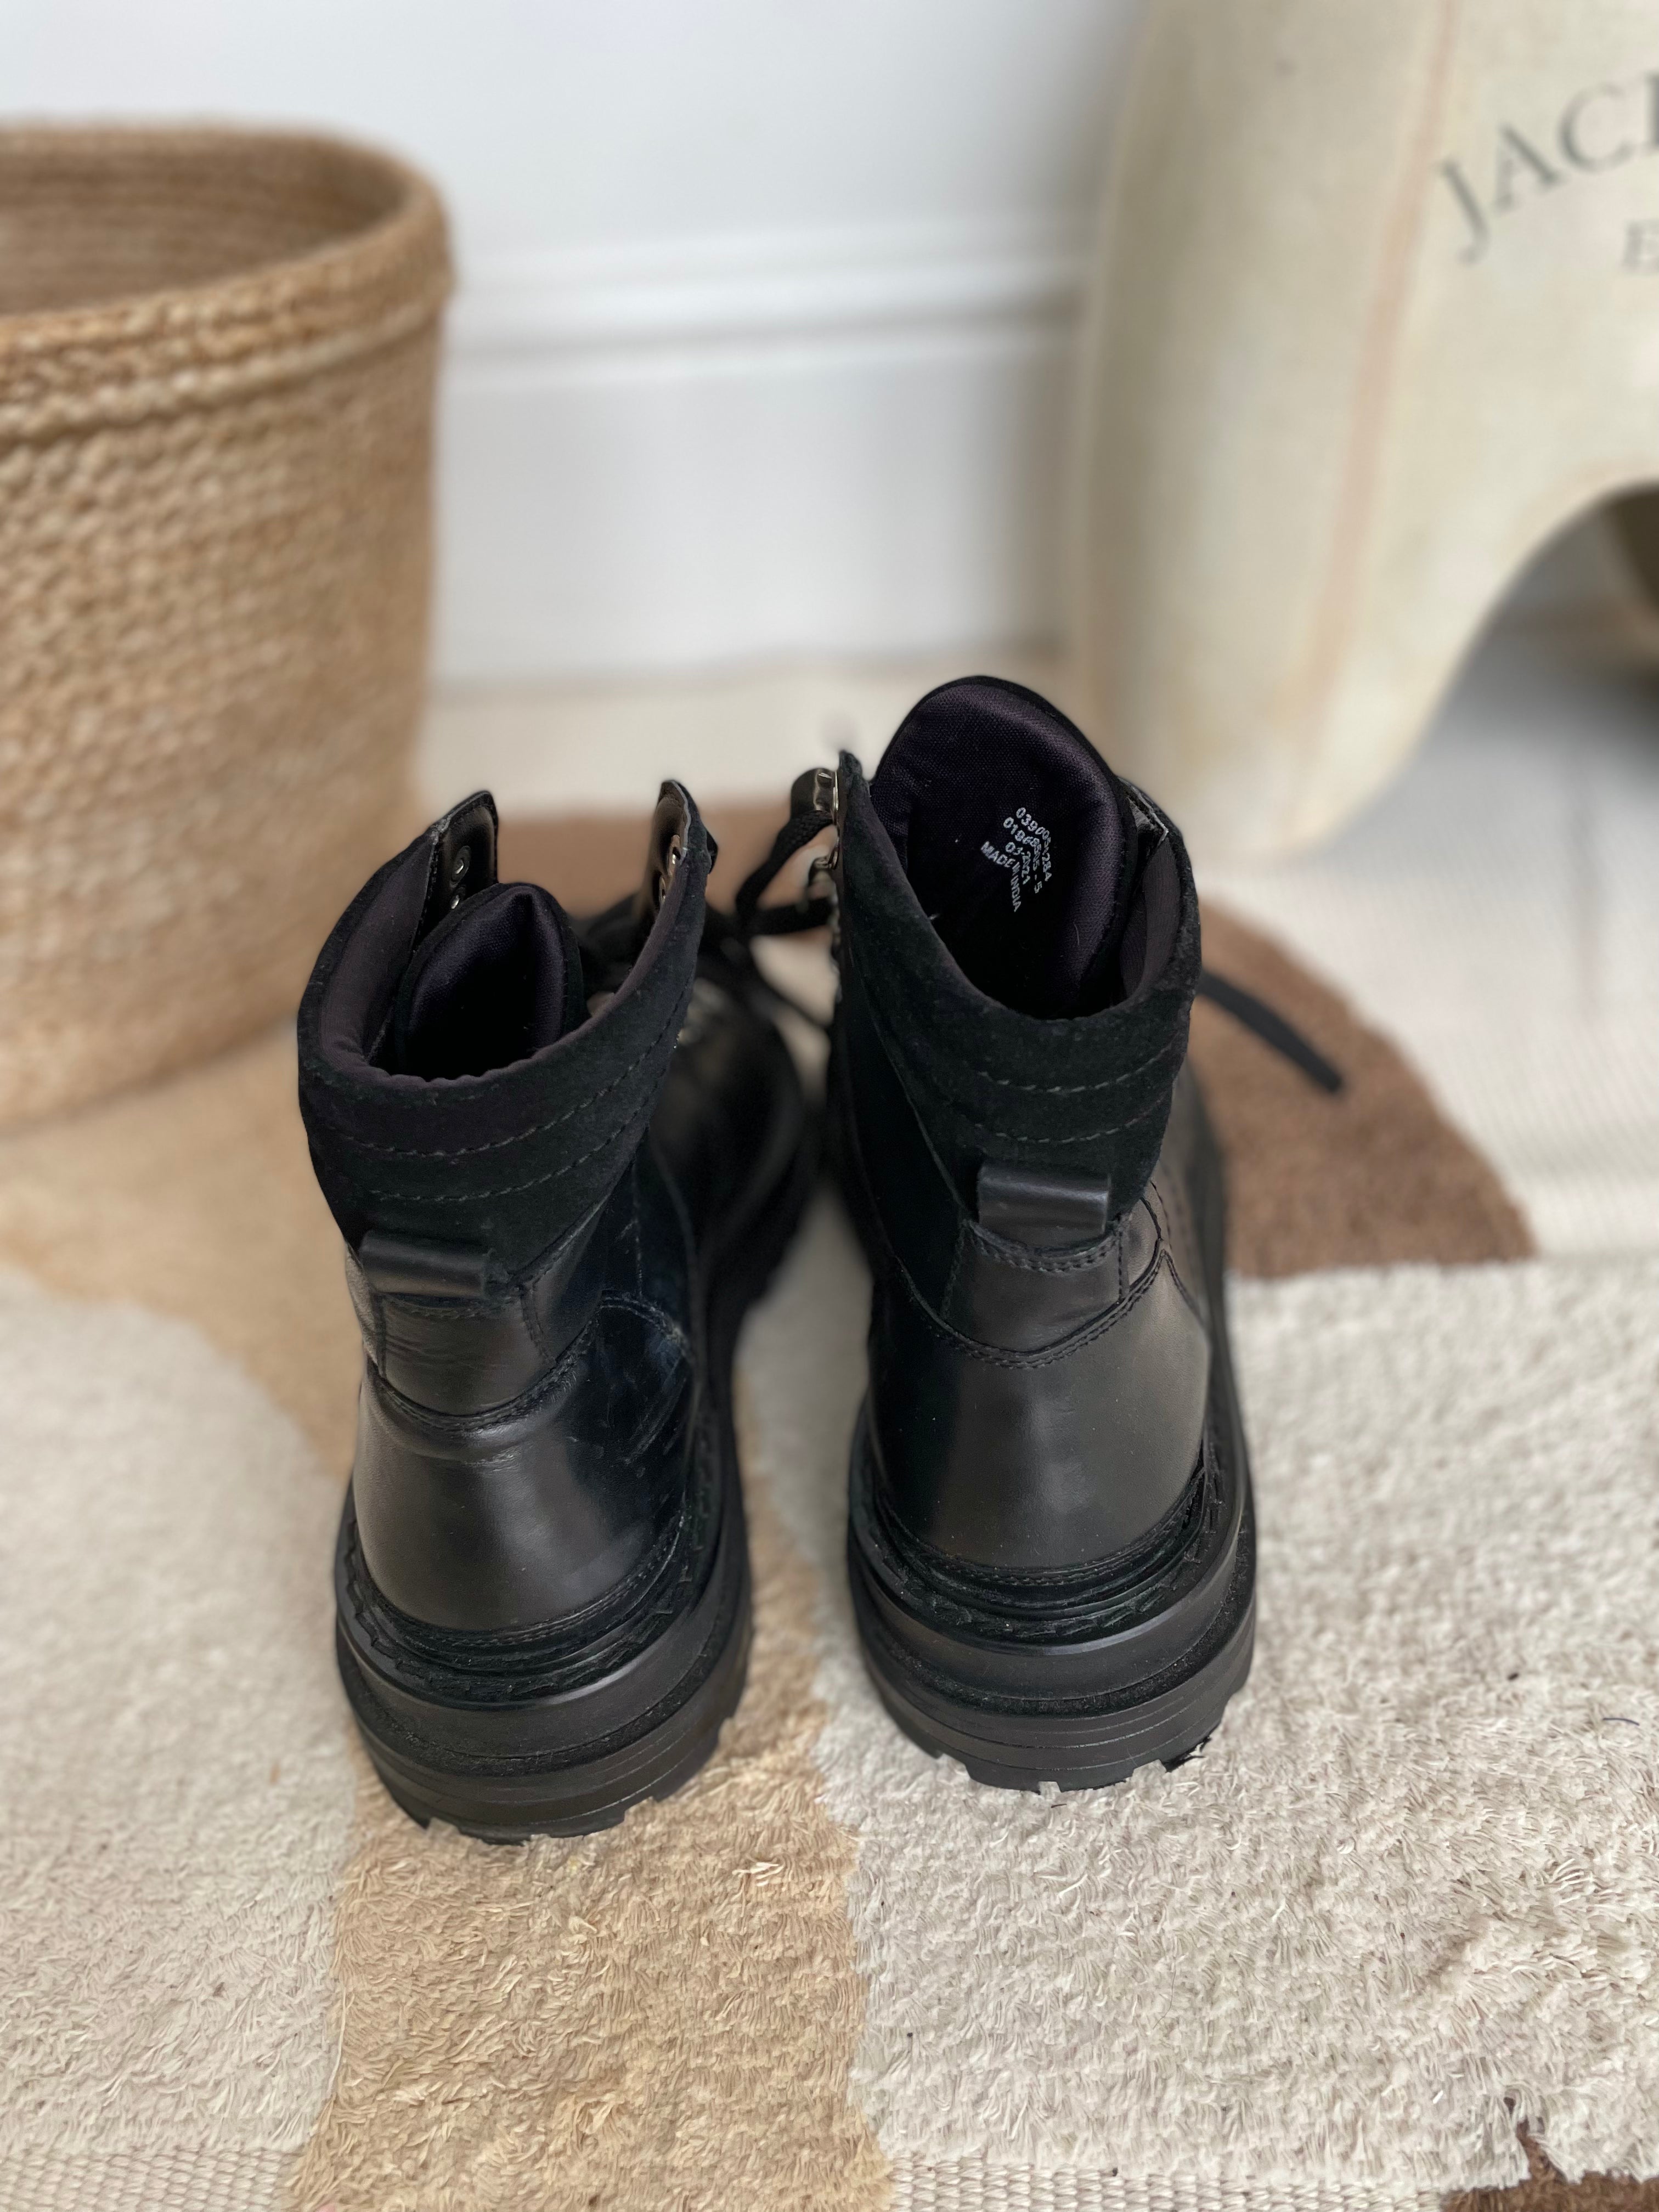 Black leather boots - ASOS - 38EU/UK5